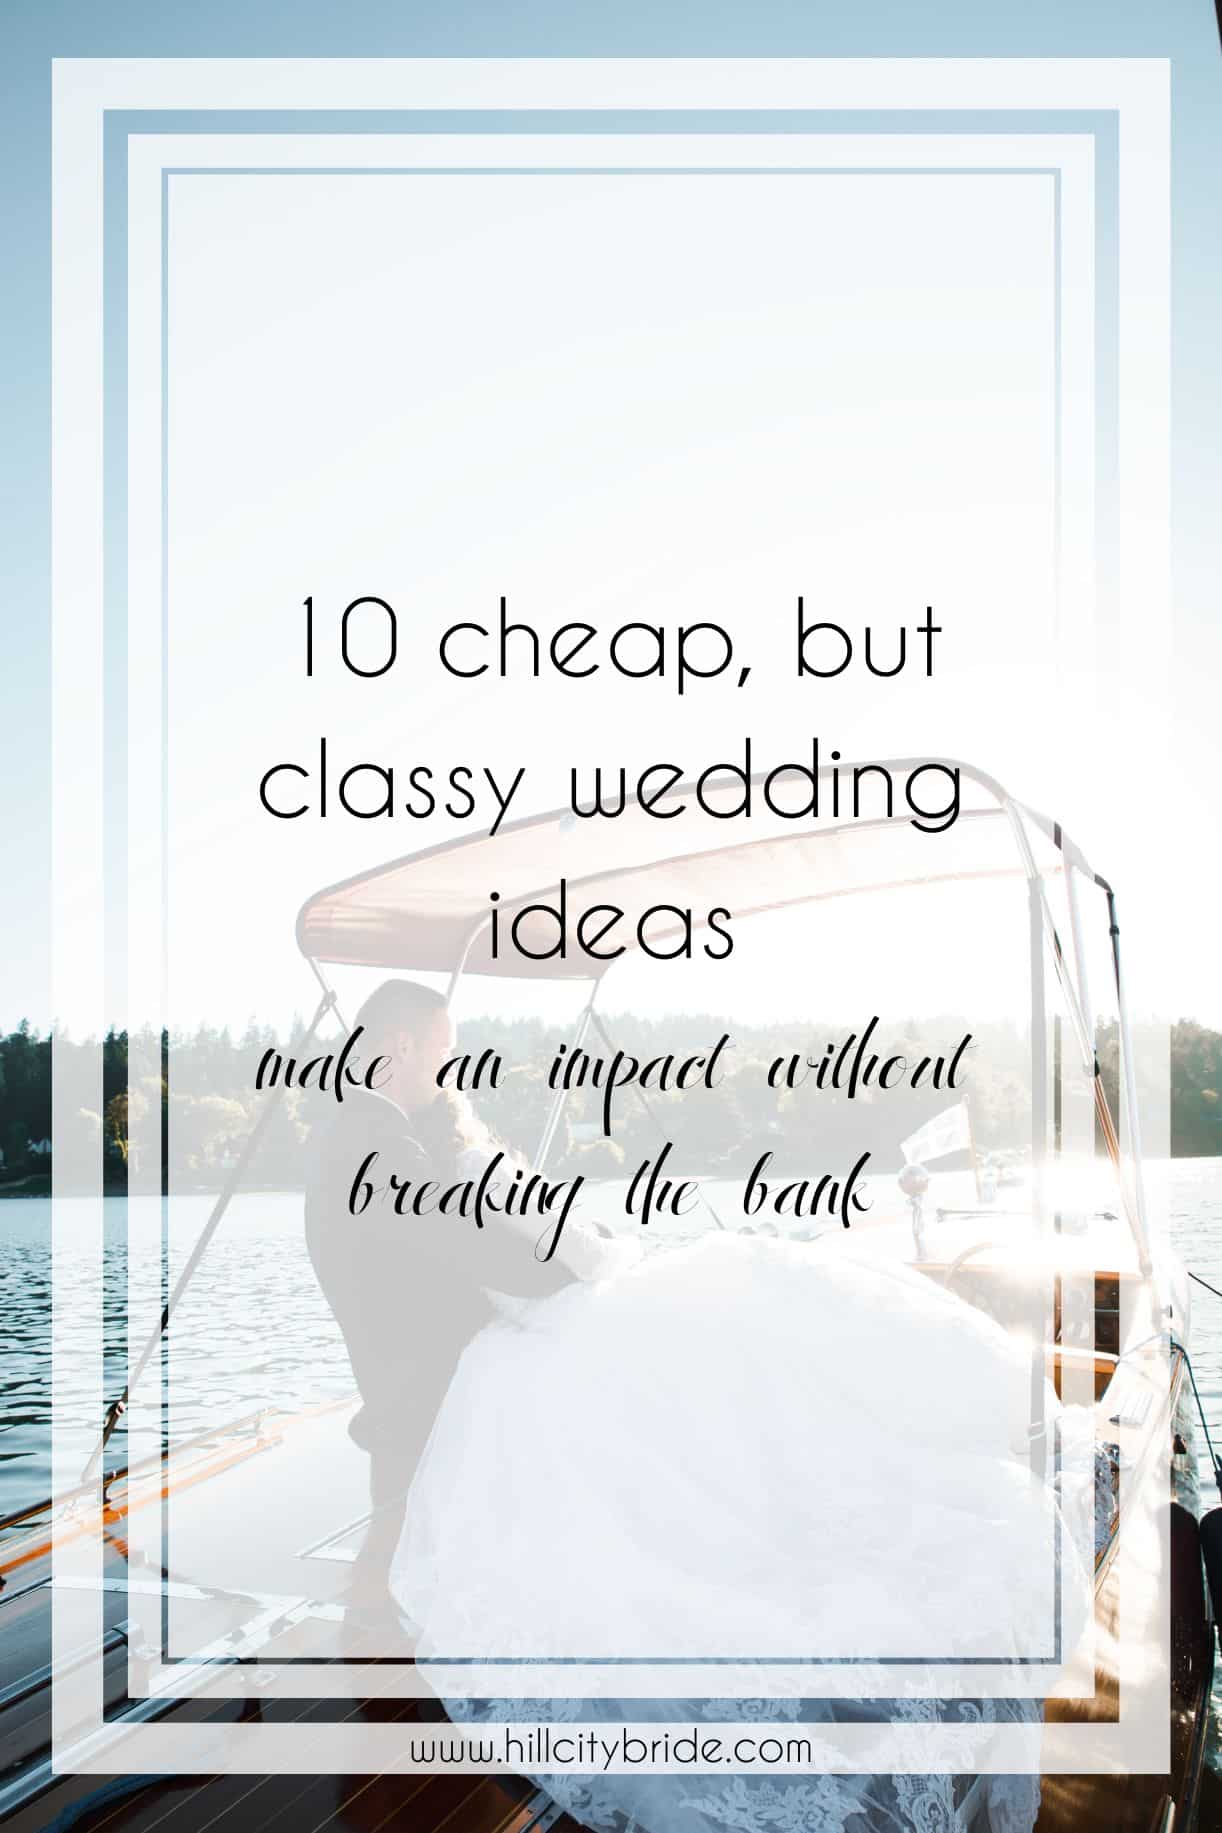 10 Cheap but Classy Wedding Reception Ideas You'll Love